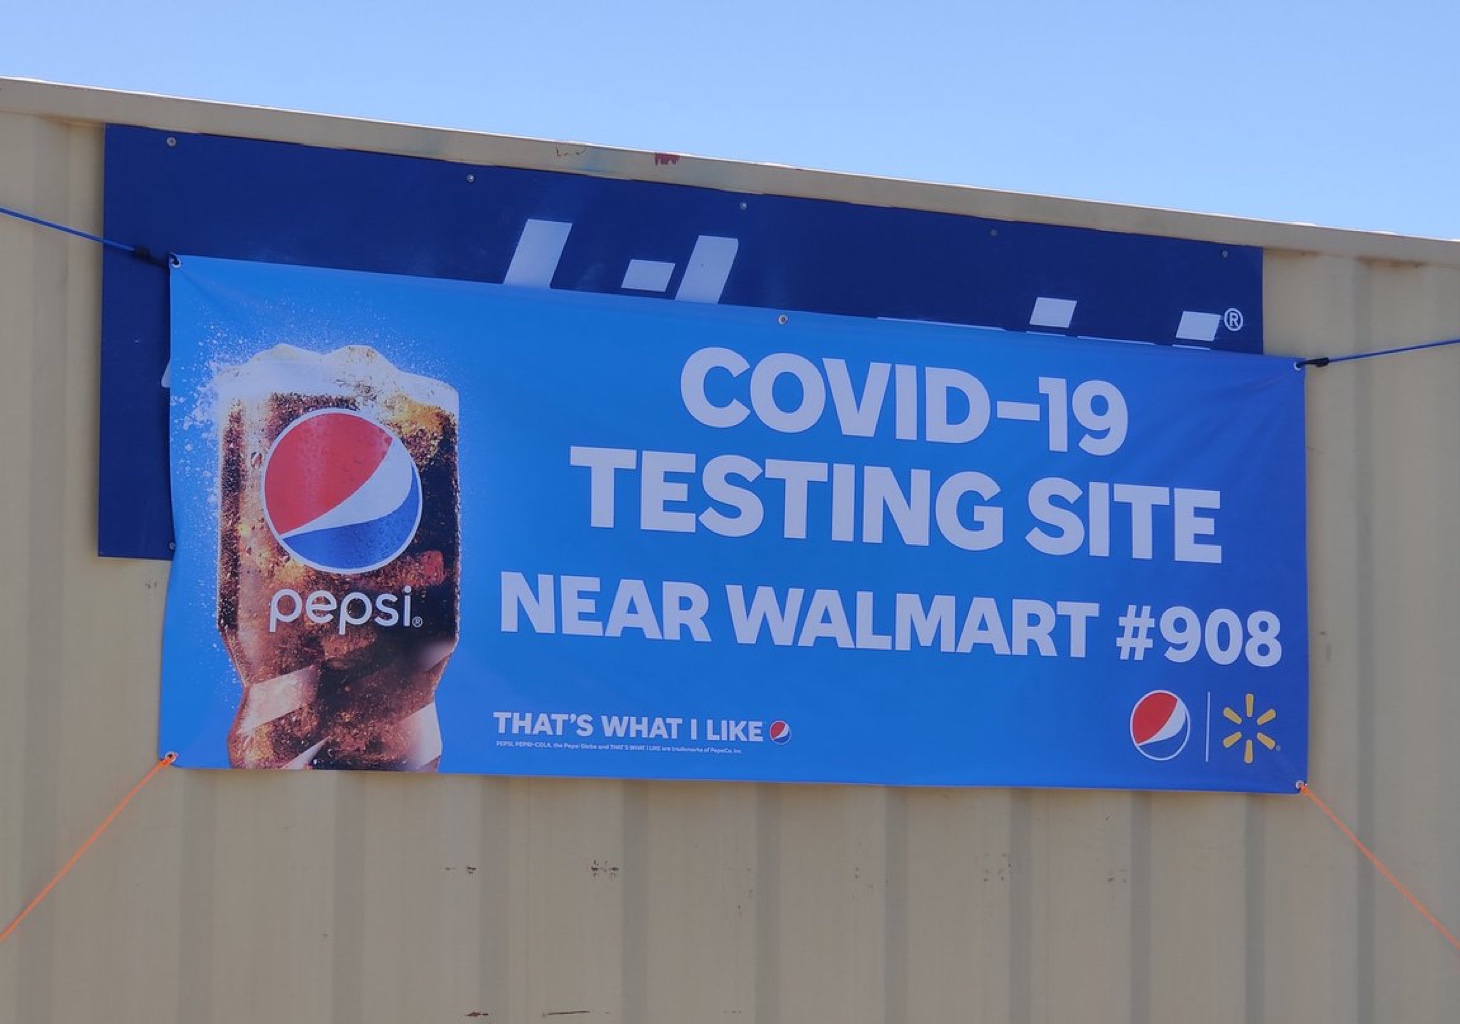 Pepsi COVID-19 testing site banner